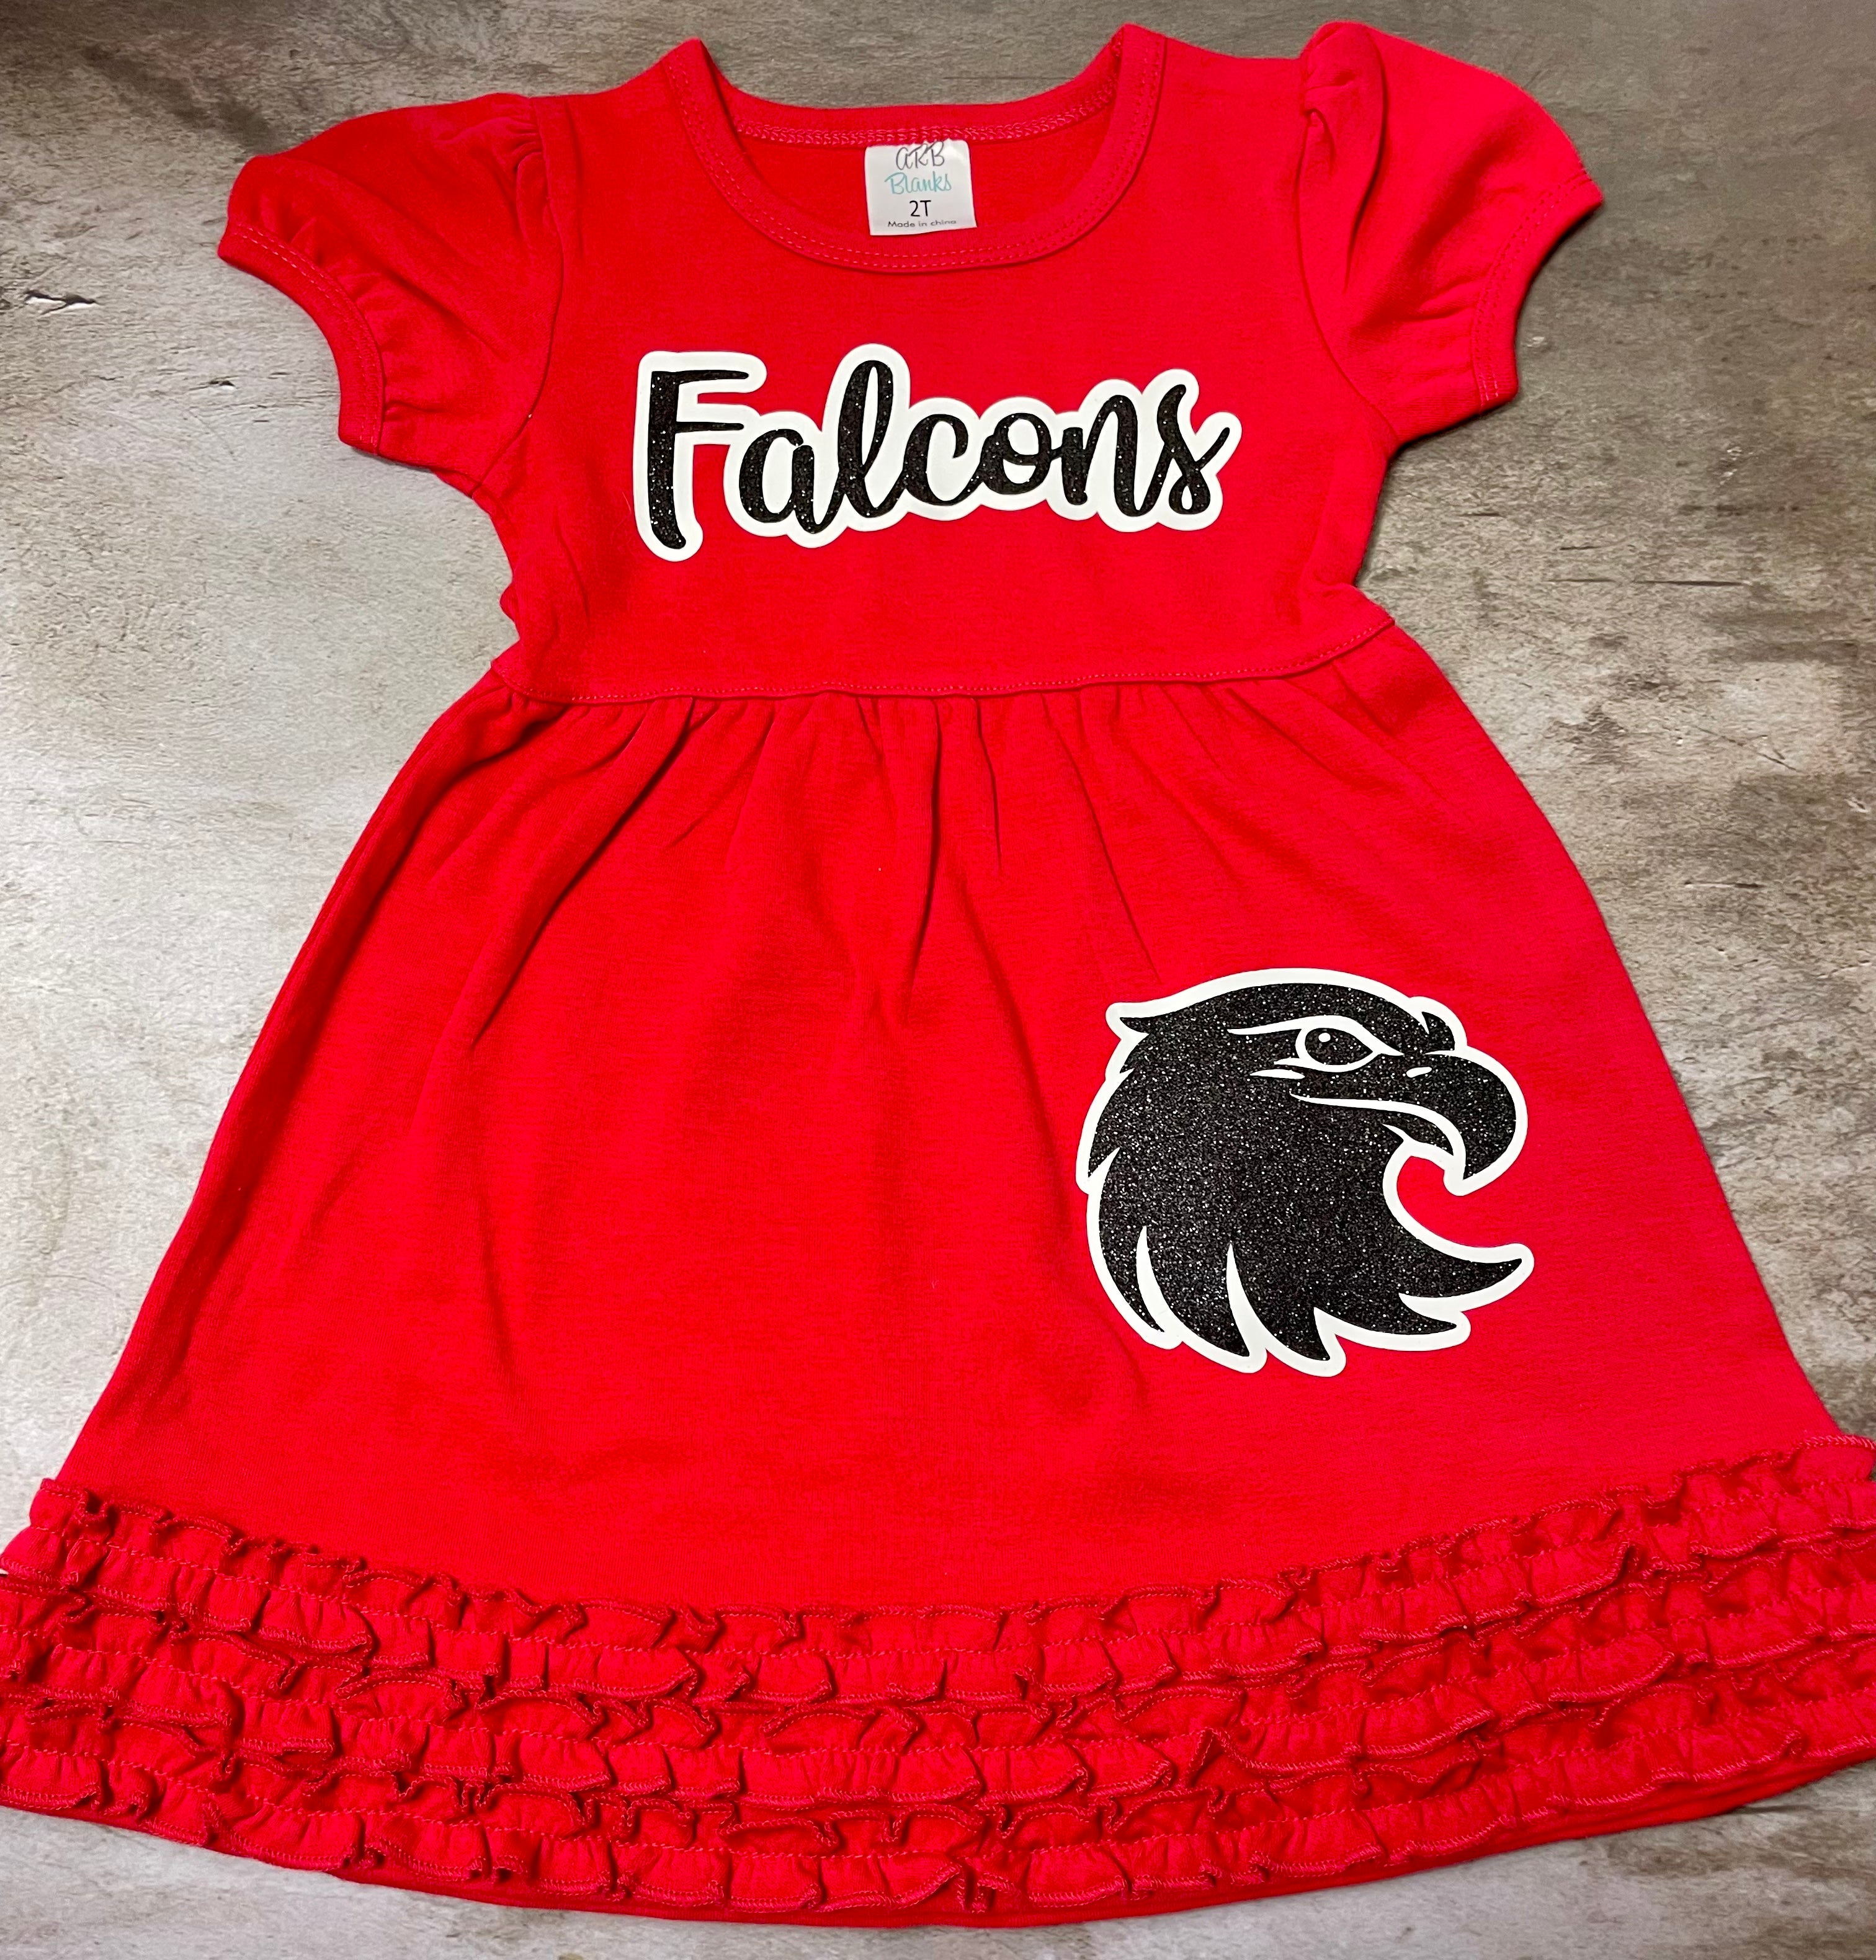 Falcons Sppcs Ruffle Dress